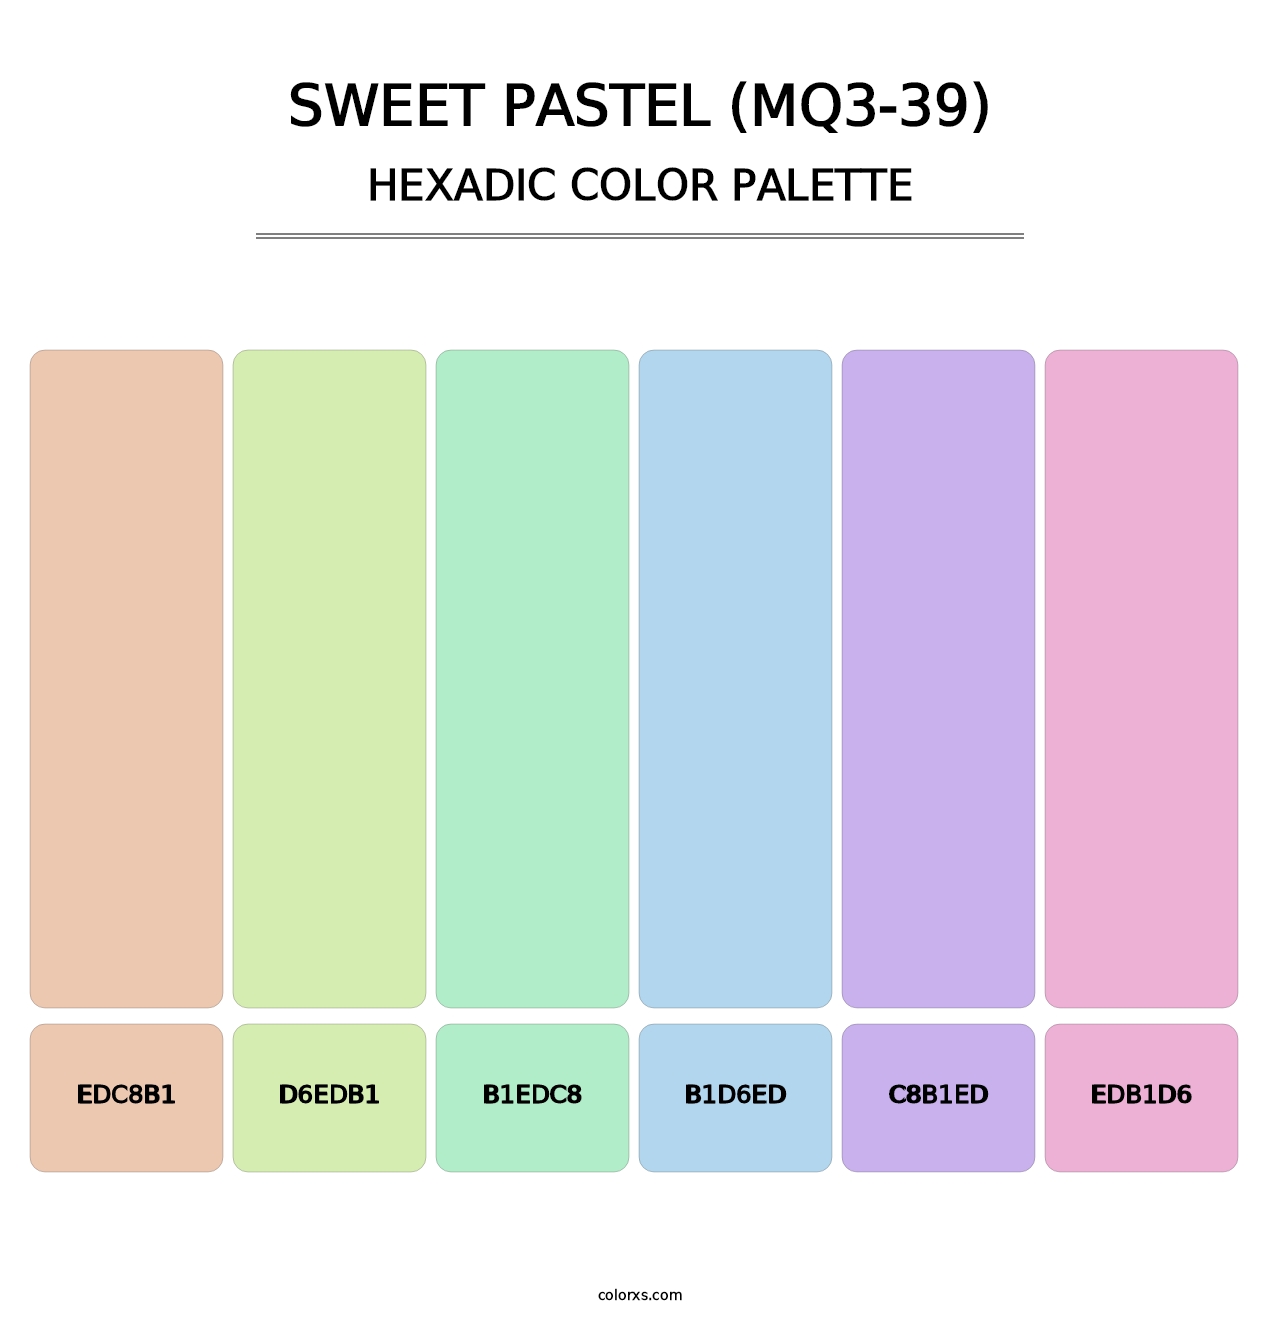 Sweet Pastel (MQ3-39) - Hexadic Color Palette